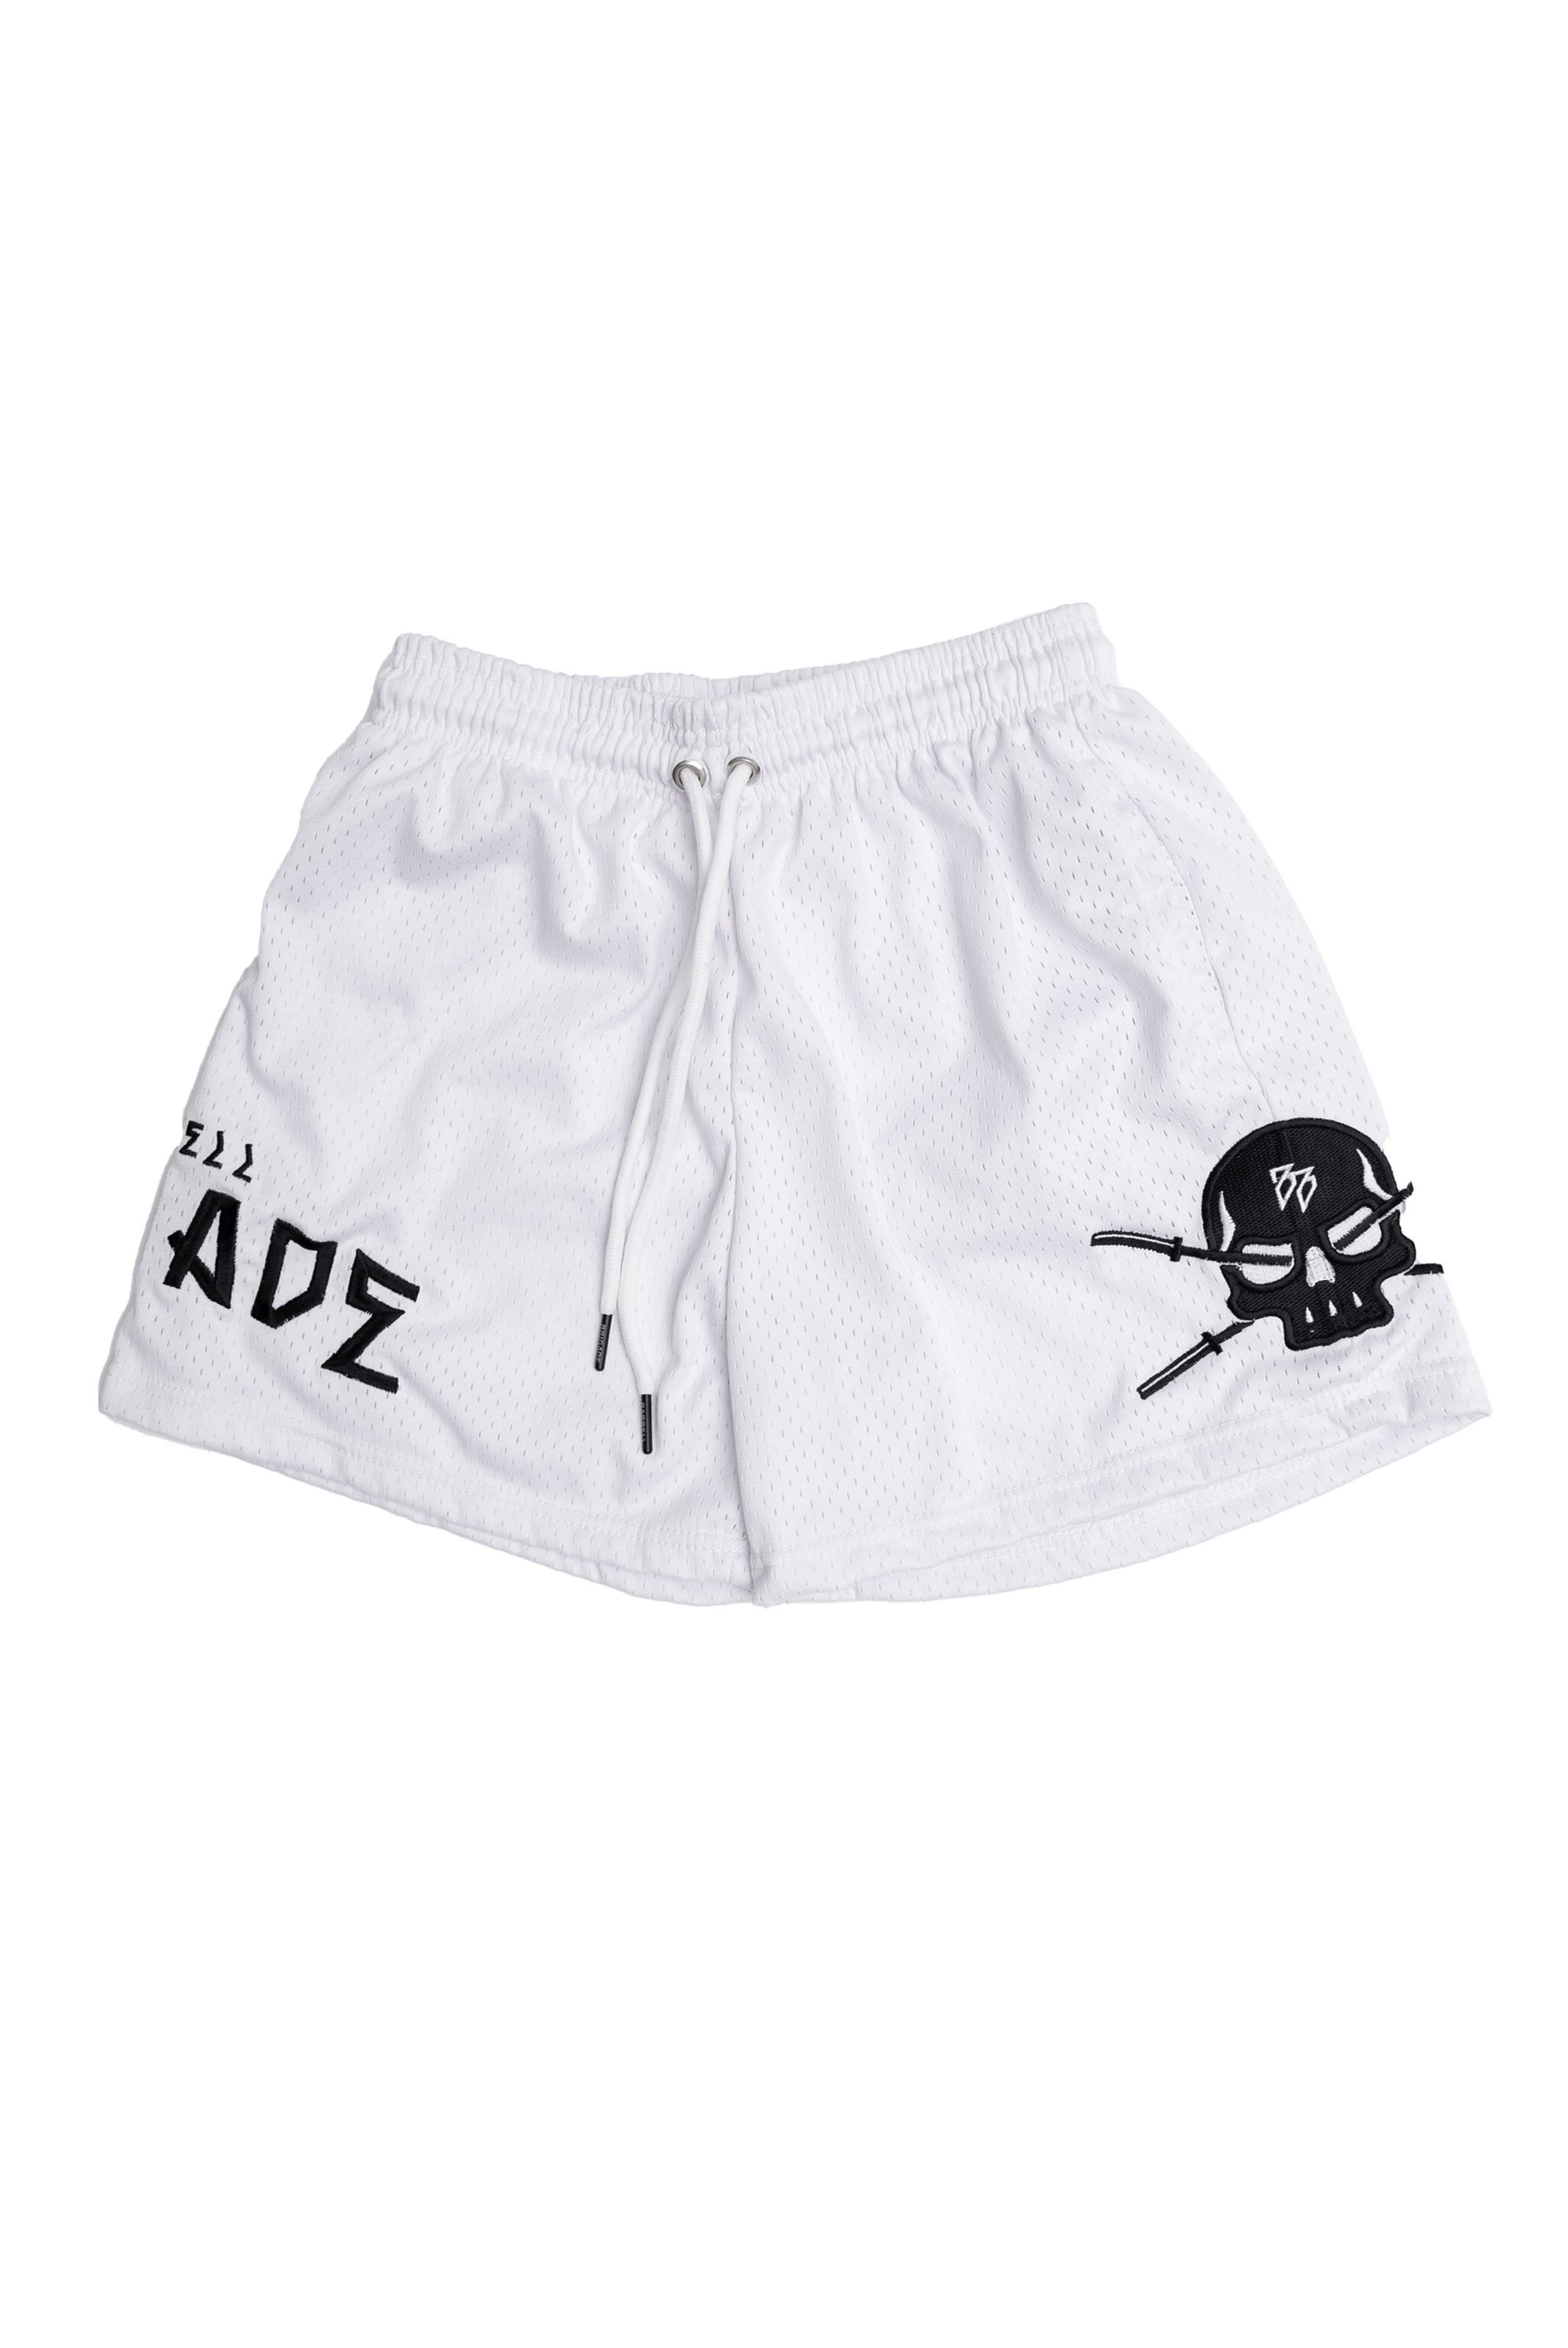 hule biord affald New Limits - Mesh Shorts (White) - Barbell Brigade